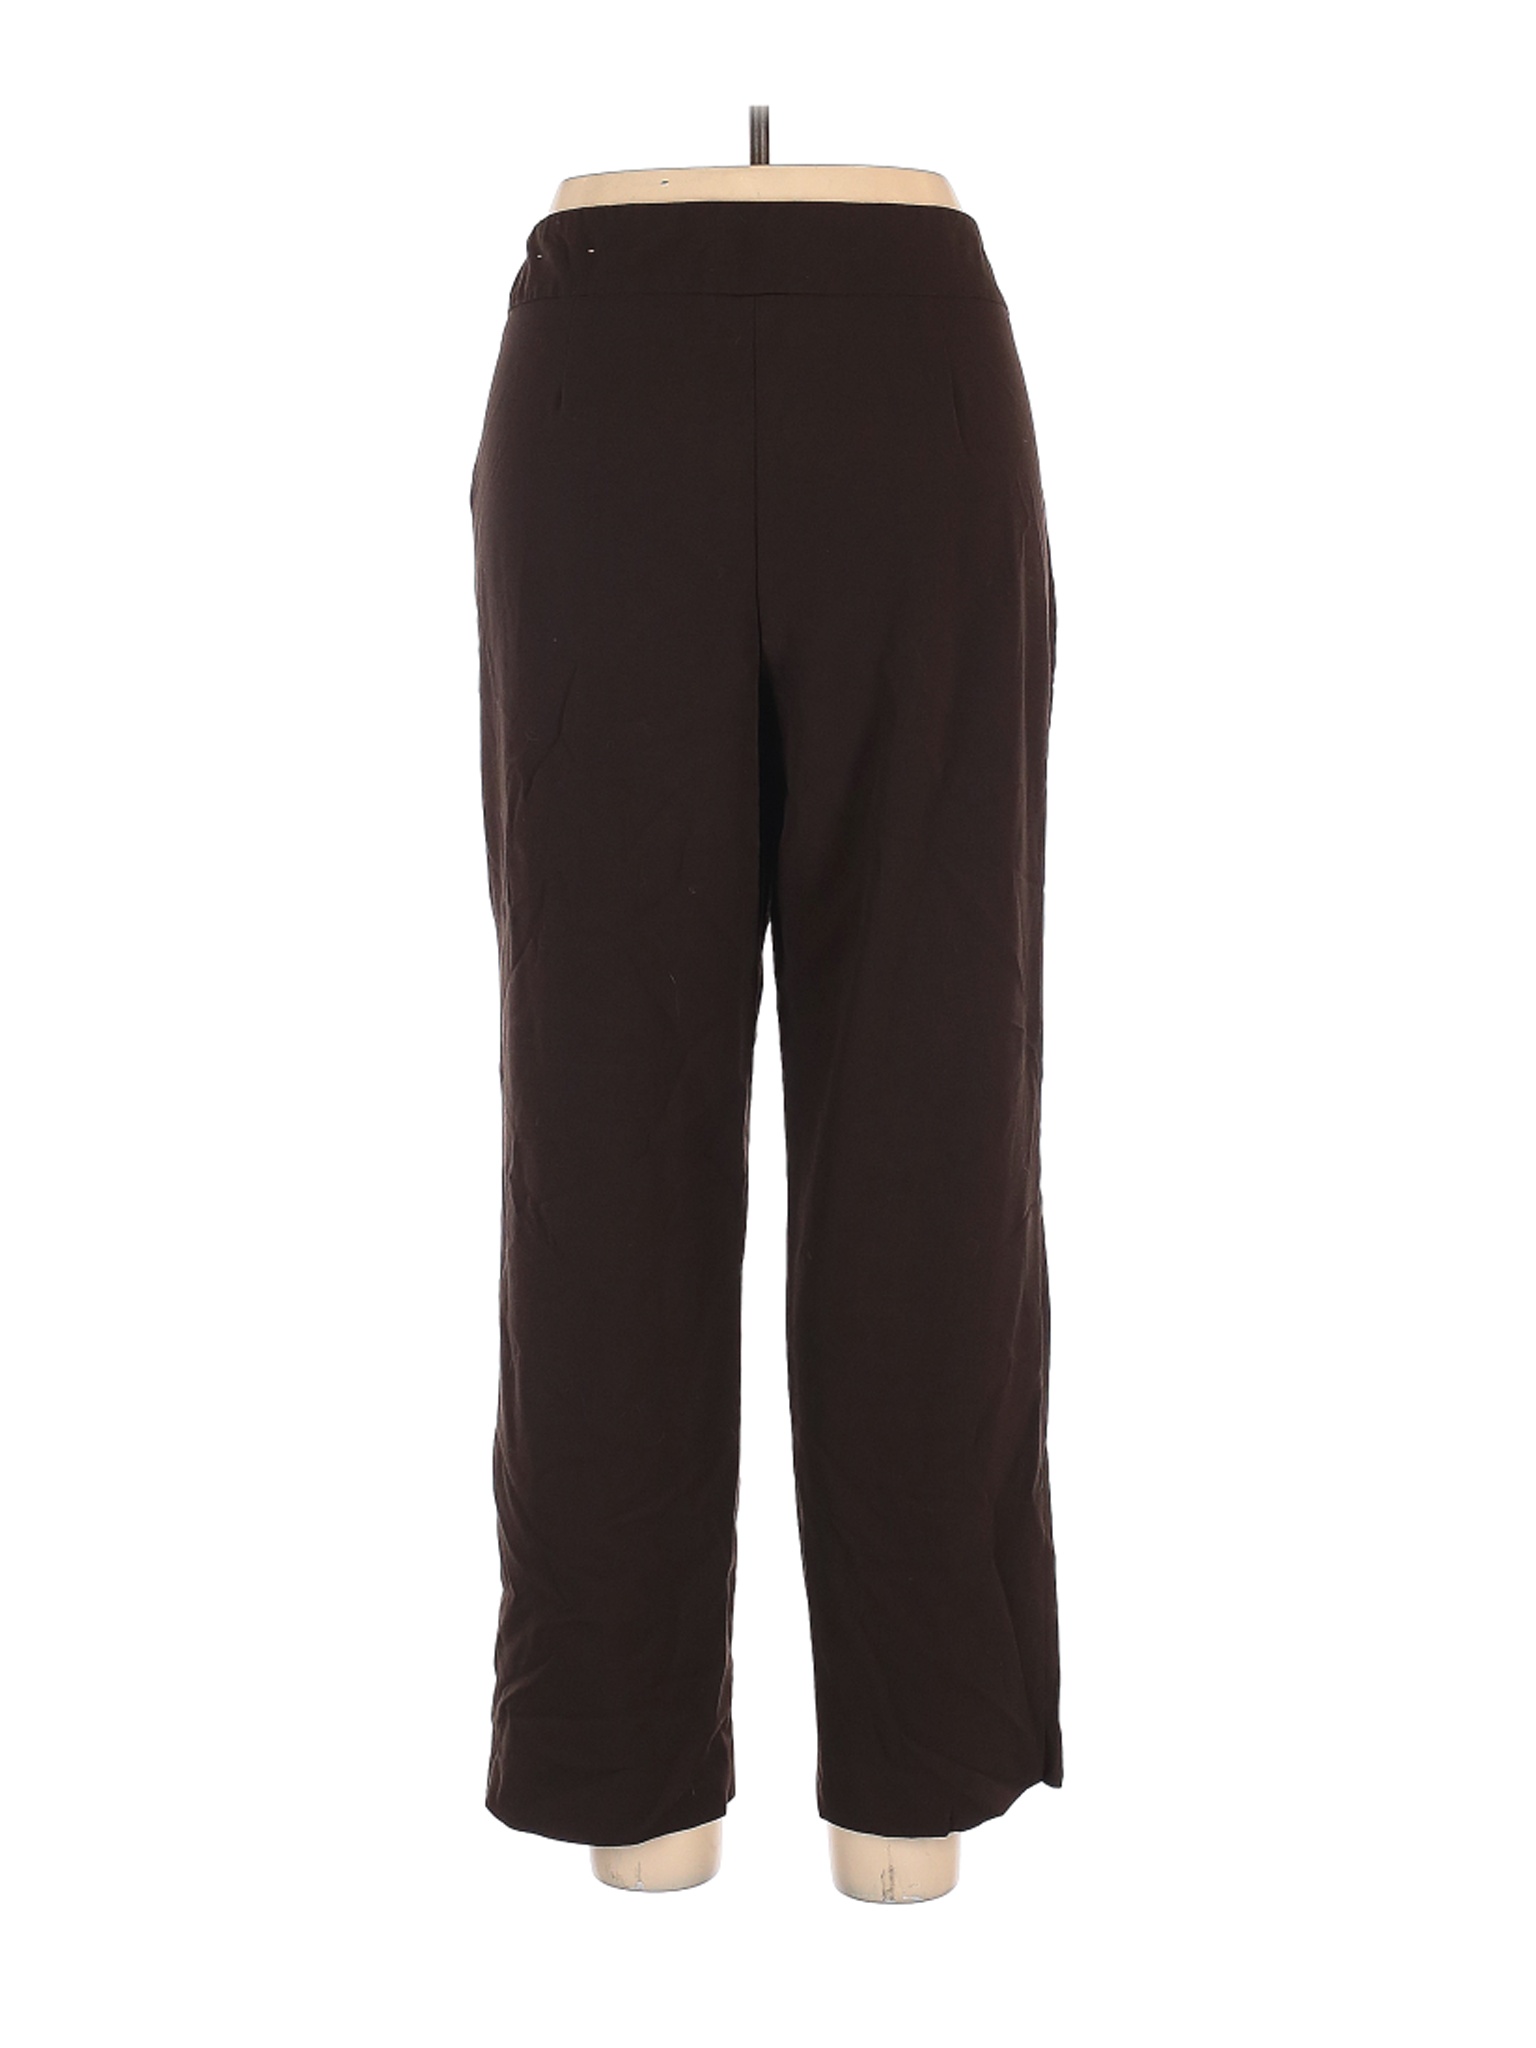 JM Collection Women Brown Casual Pants 16 | eBay